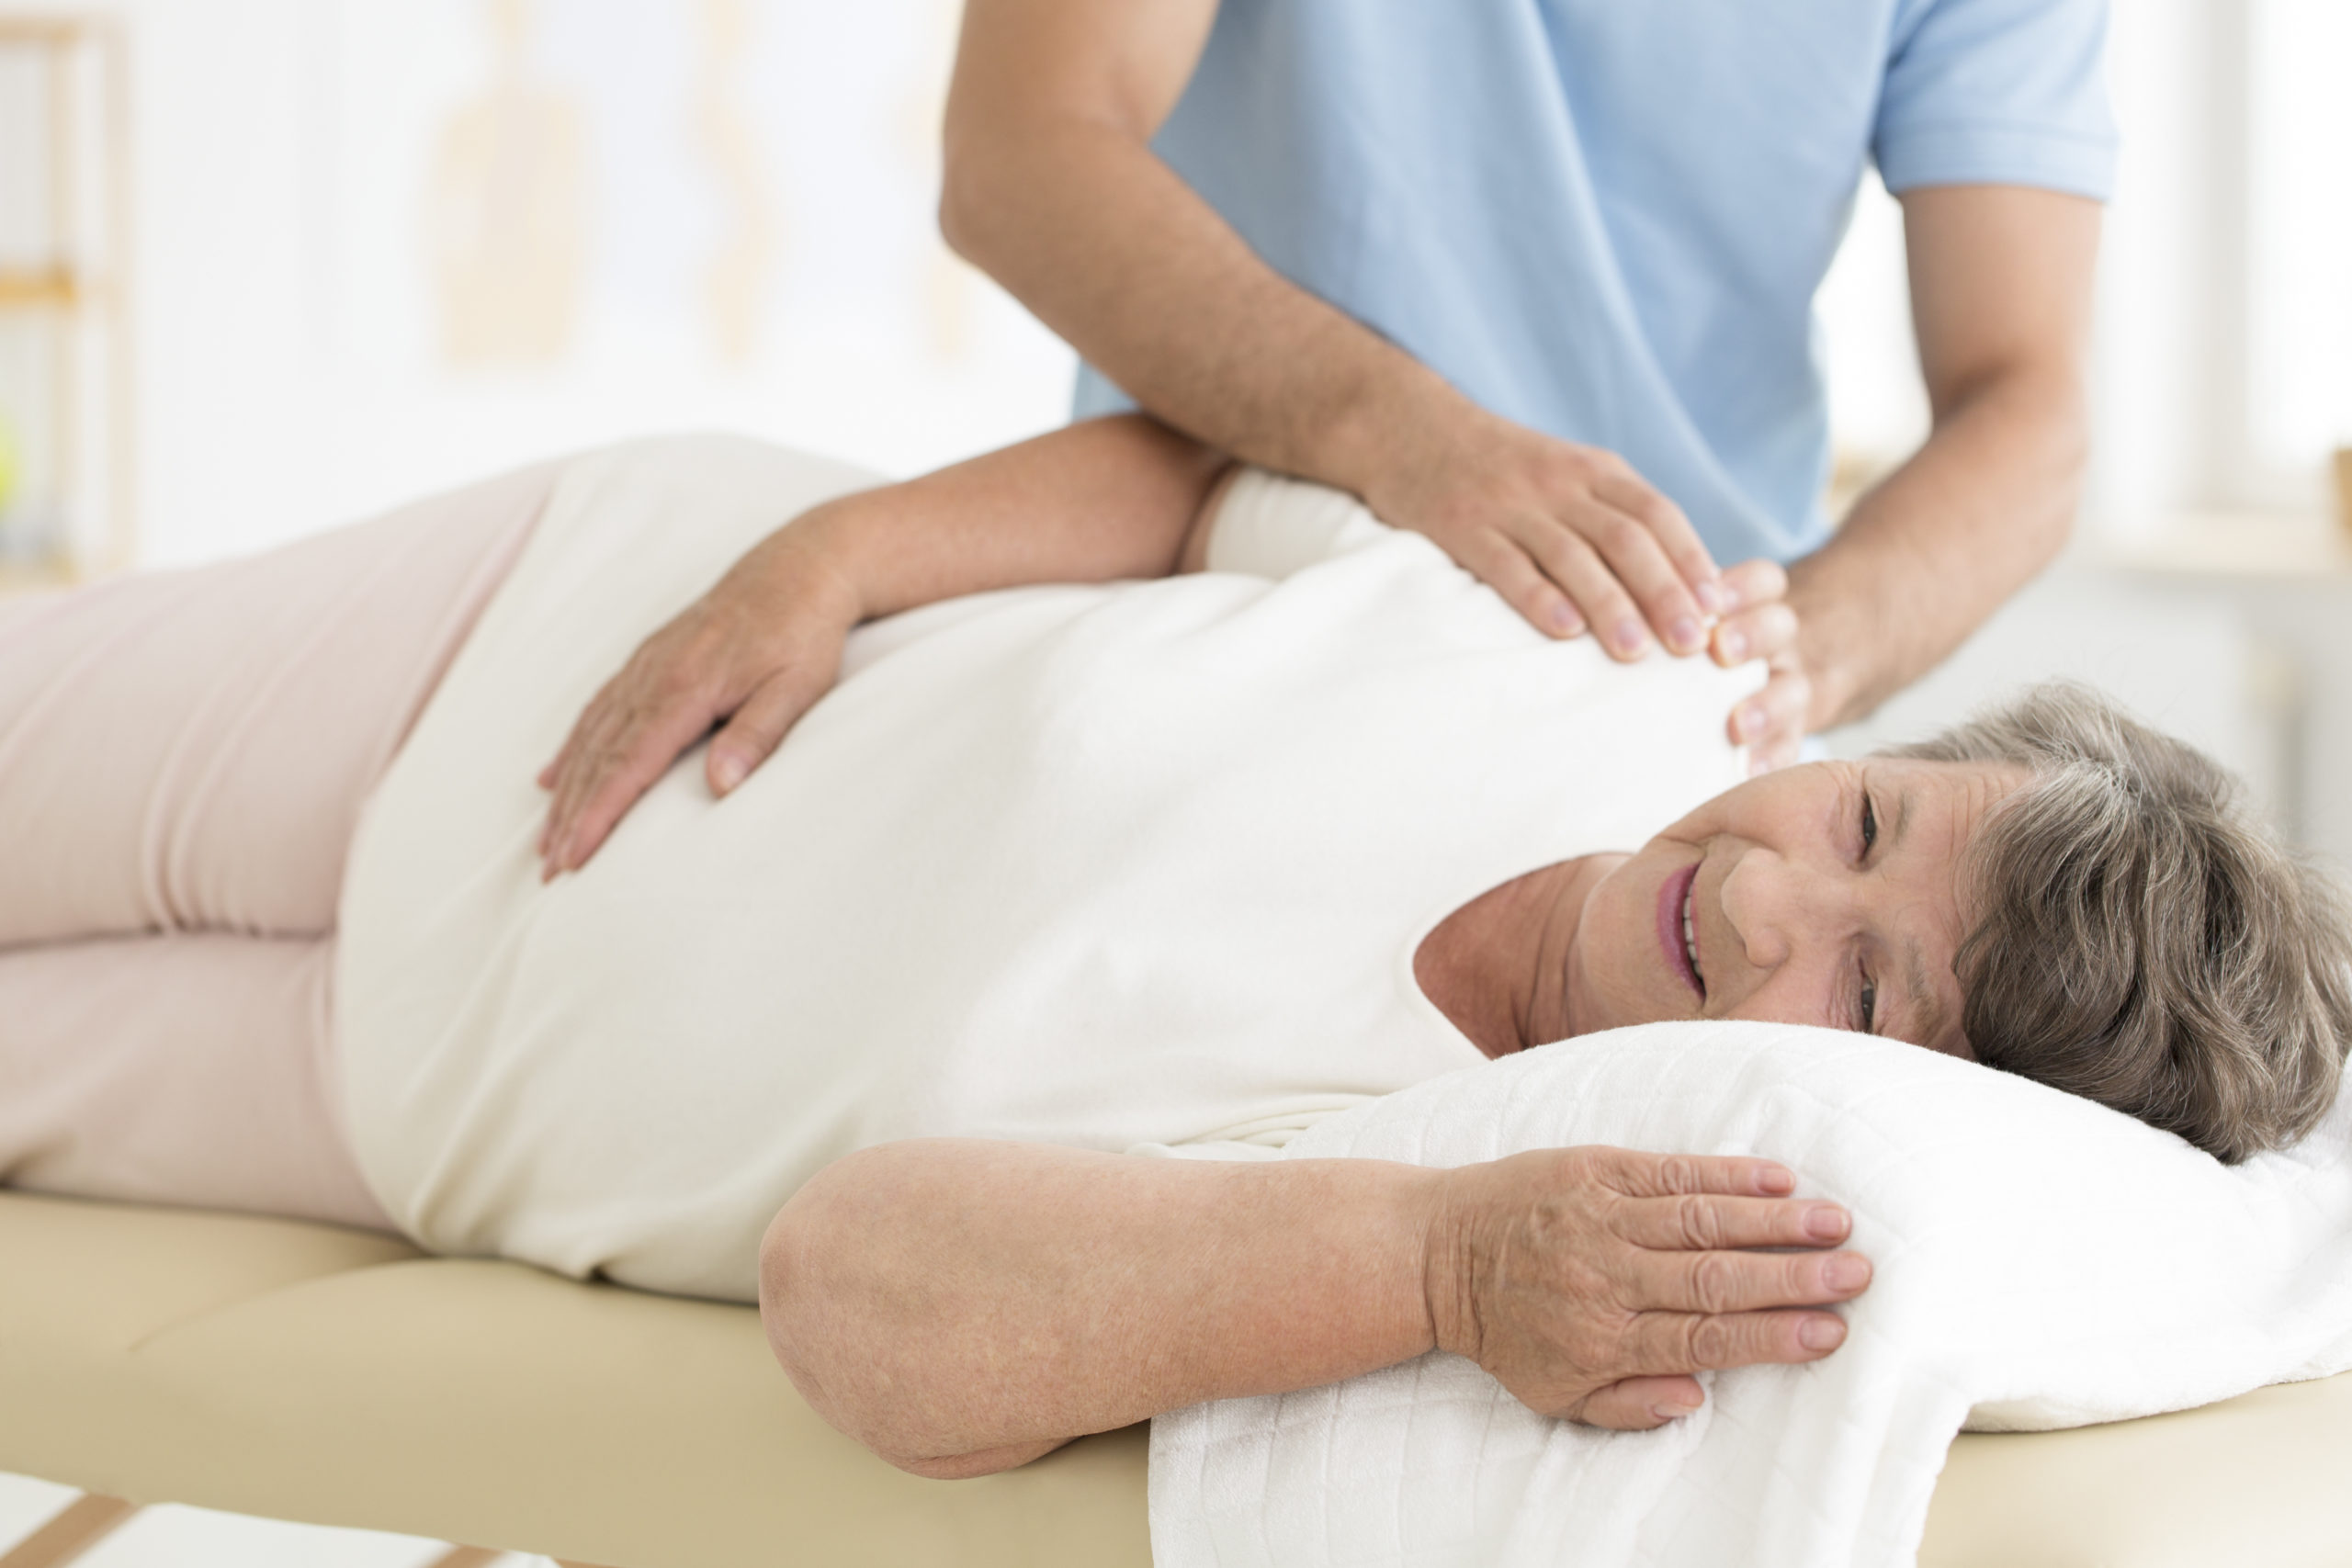 Professional masseur massaging shoulders of senior woman after an injury